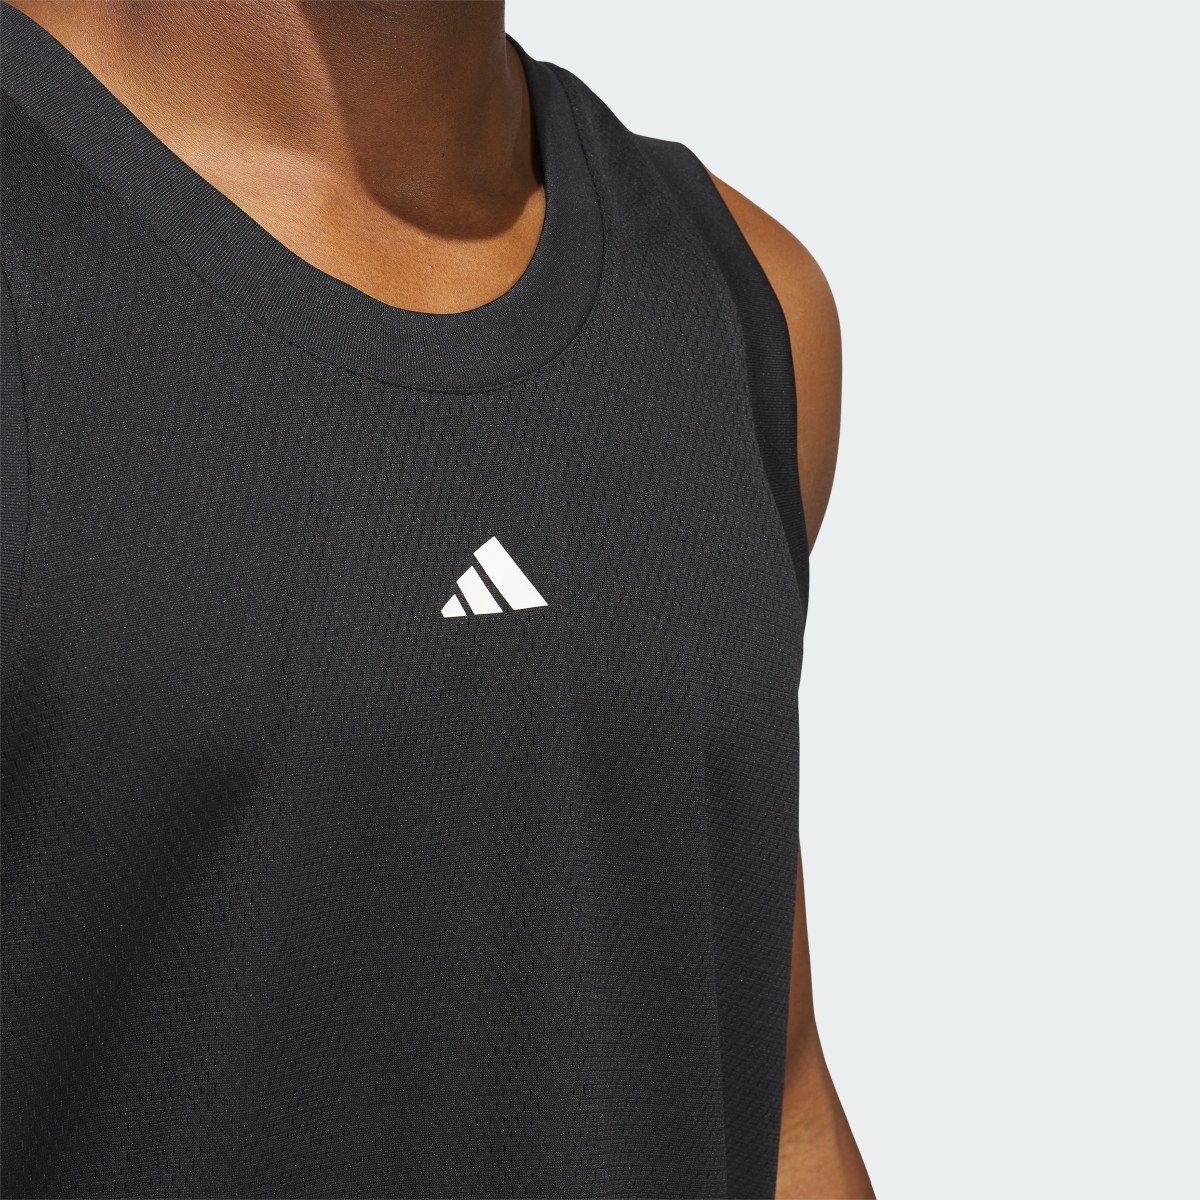 Adidas Camiseta sin mangas Basketball Legends. 6